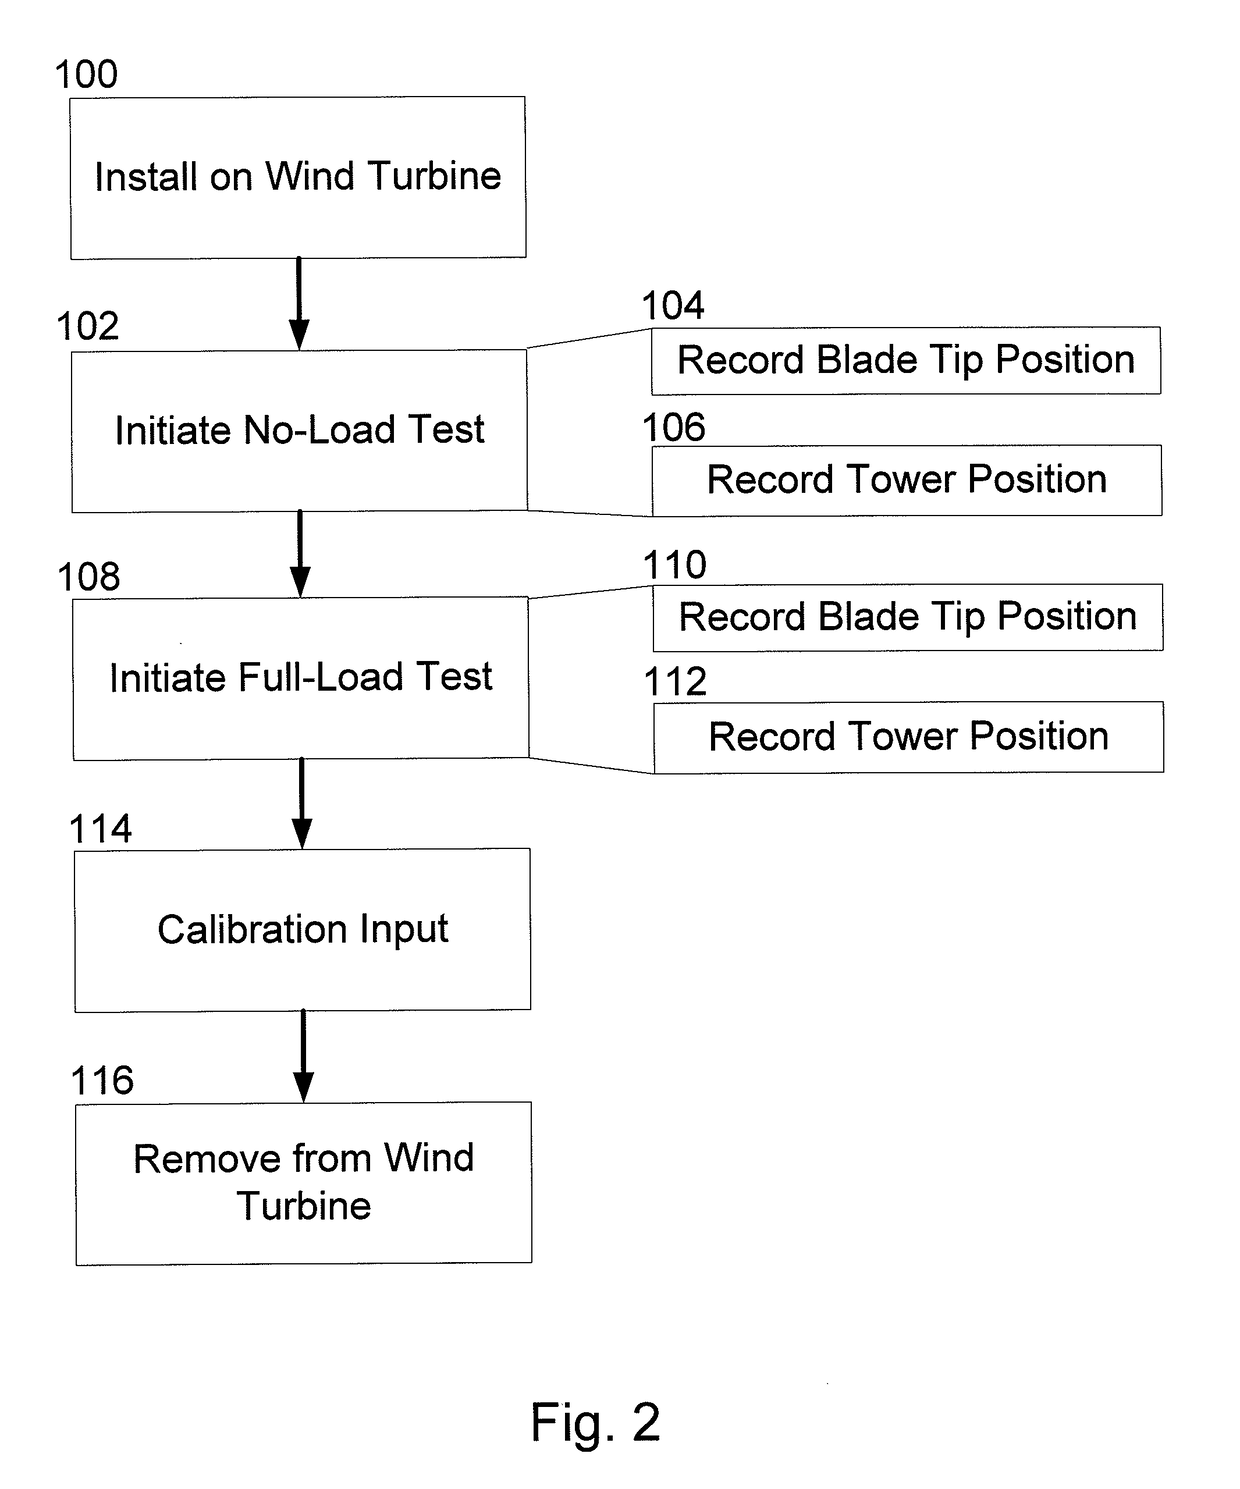 System and method for wind turbine sensor calibration